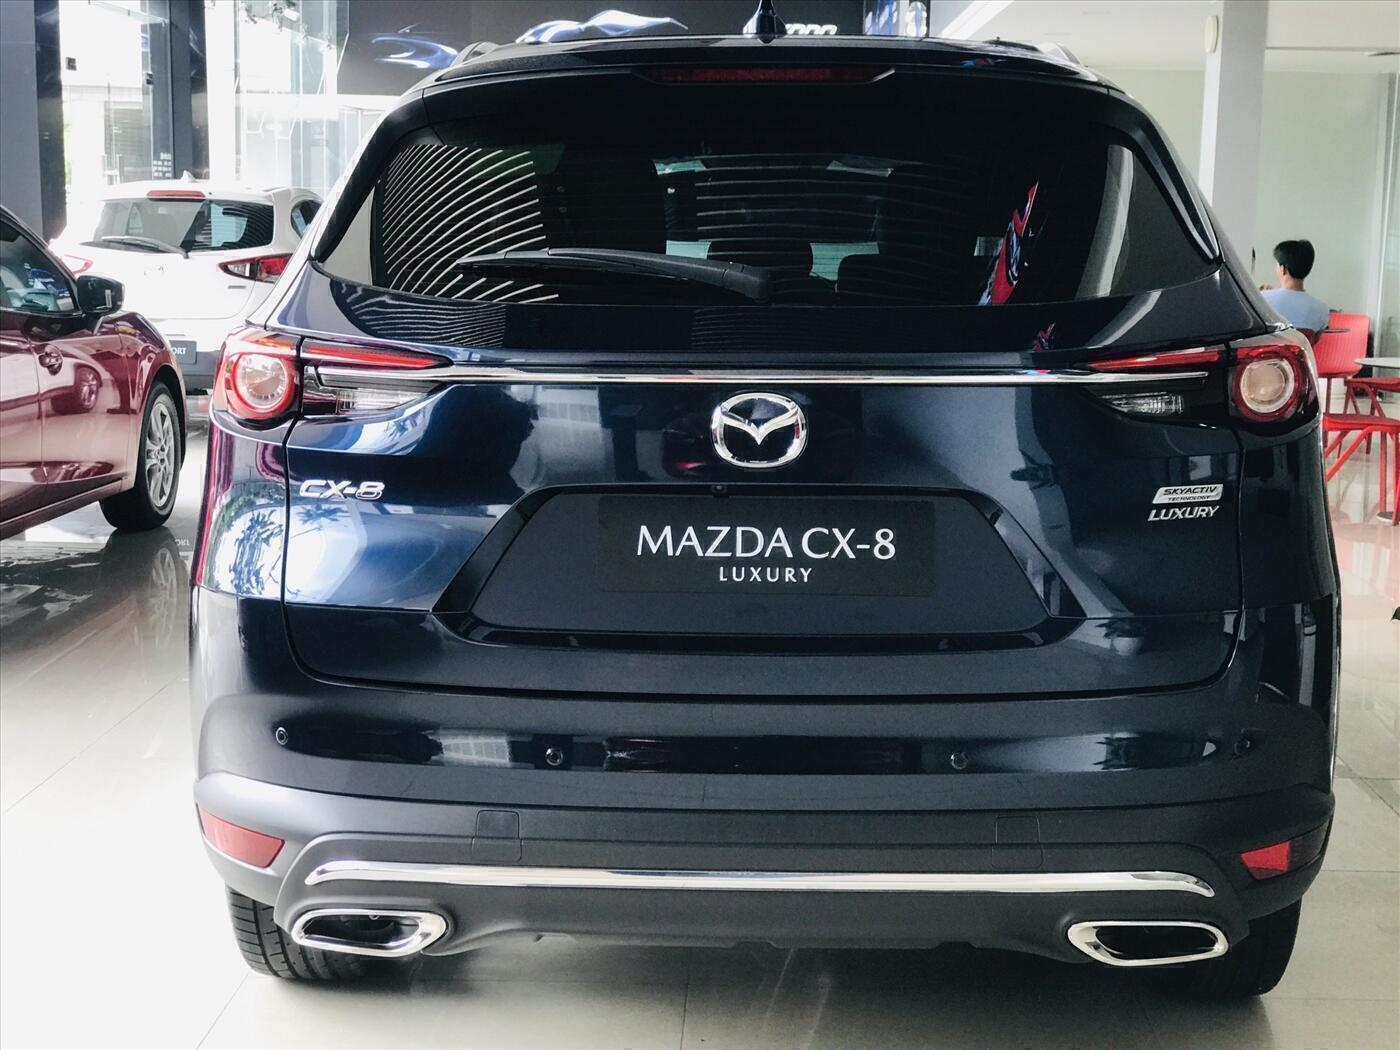 Mazda CX-8 Luxury